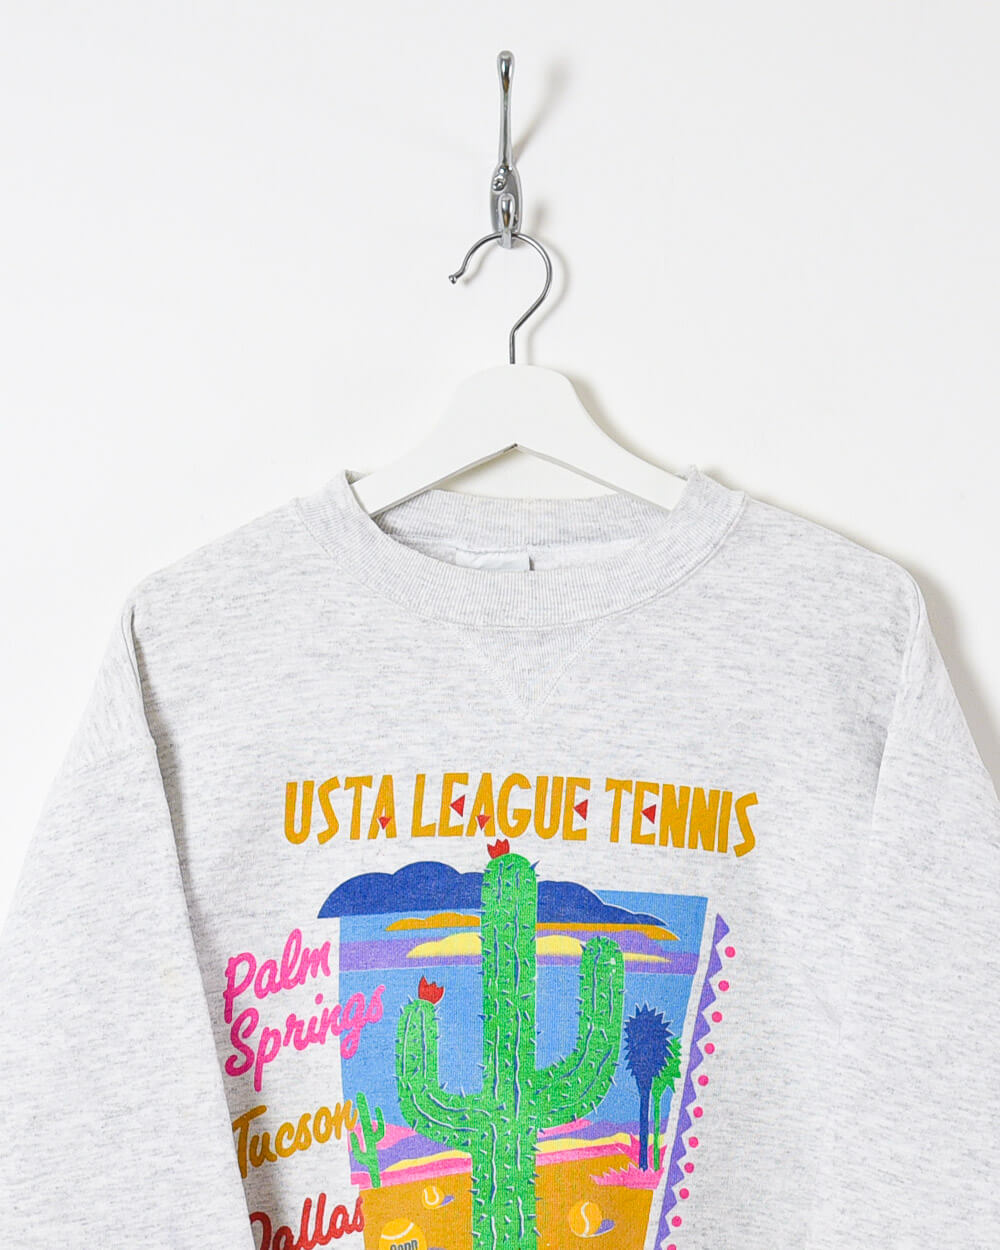 USTA League Tennis 1991 National Championships Sweatshirt - Medium - Domno Vintage 90s, 80s, 00s Retro and Vintage Clothing 